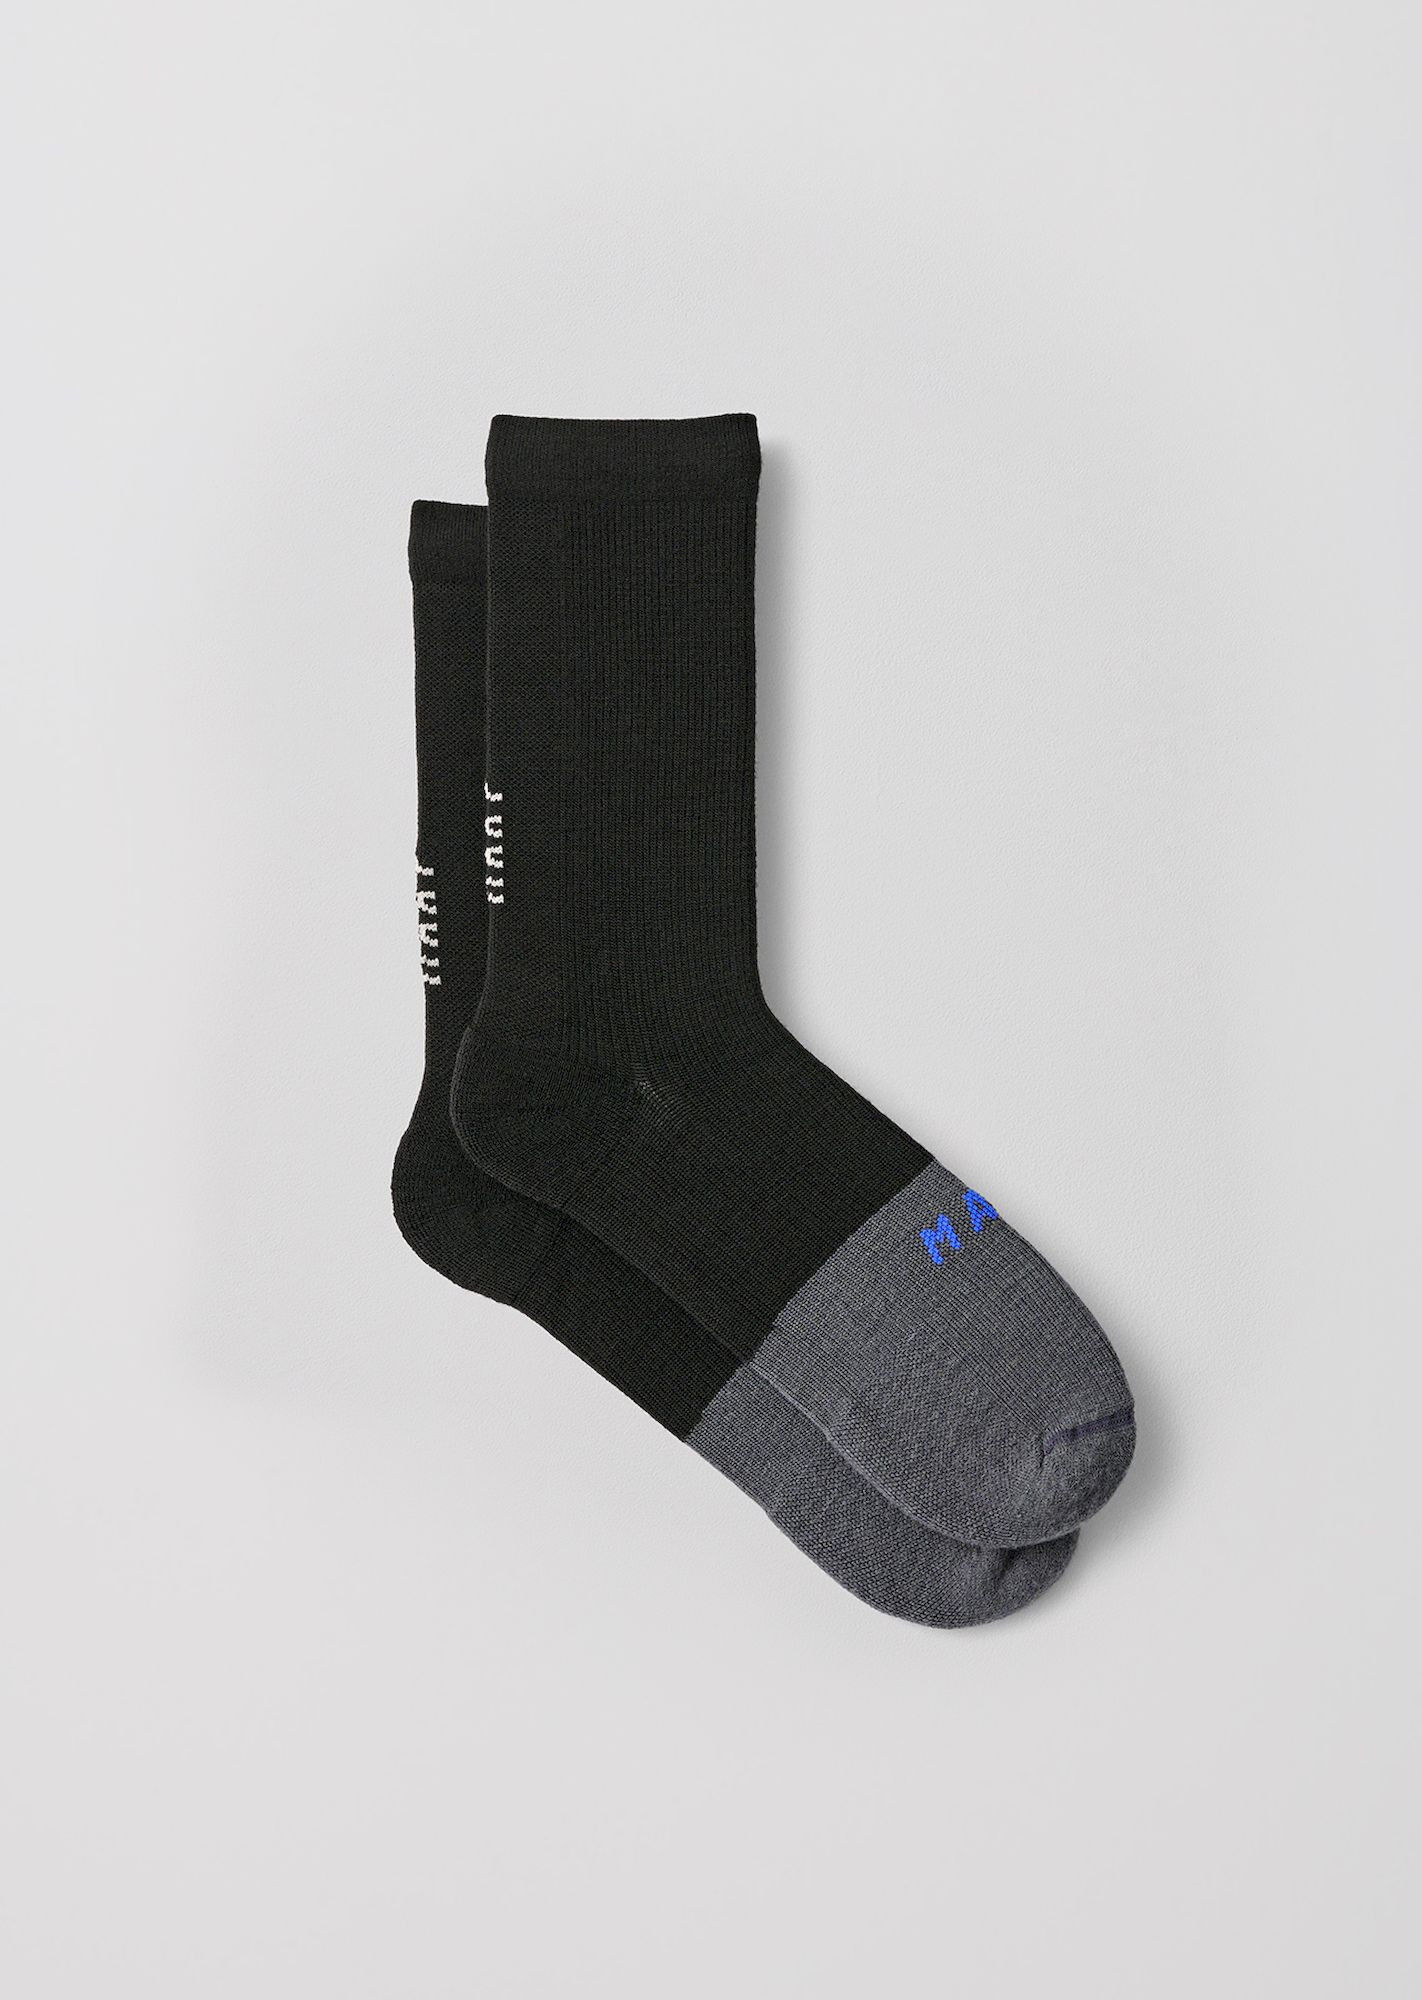 Maap Division Merino Sock - Chaussettes en laine mérinos | Hardloop